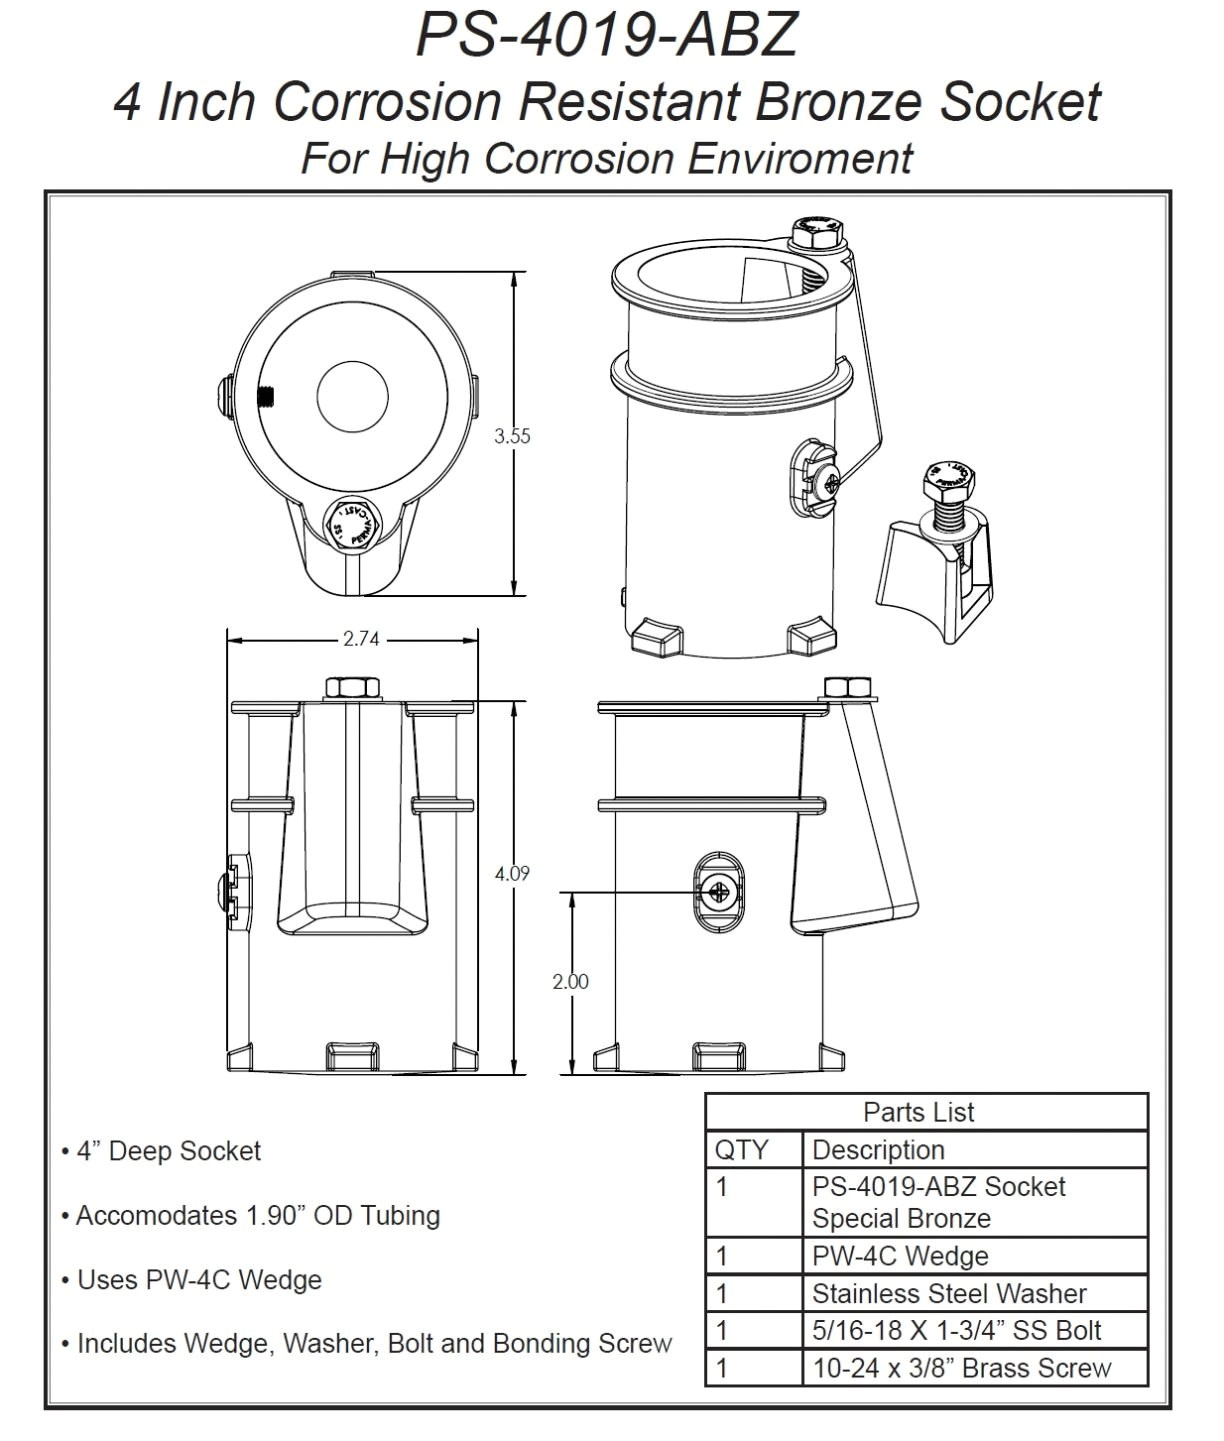 hayward 1 5 hp pool pump wiring diagram download